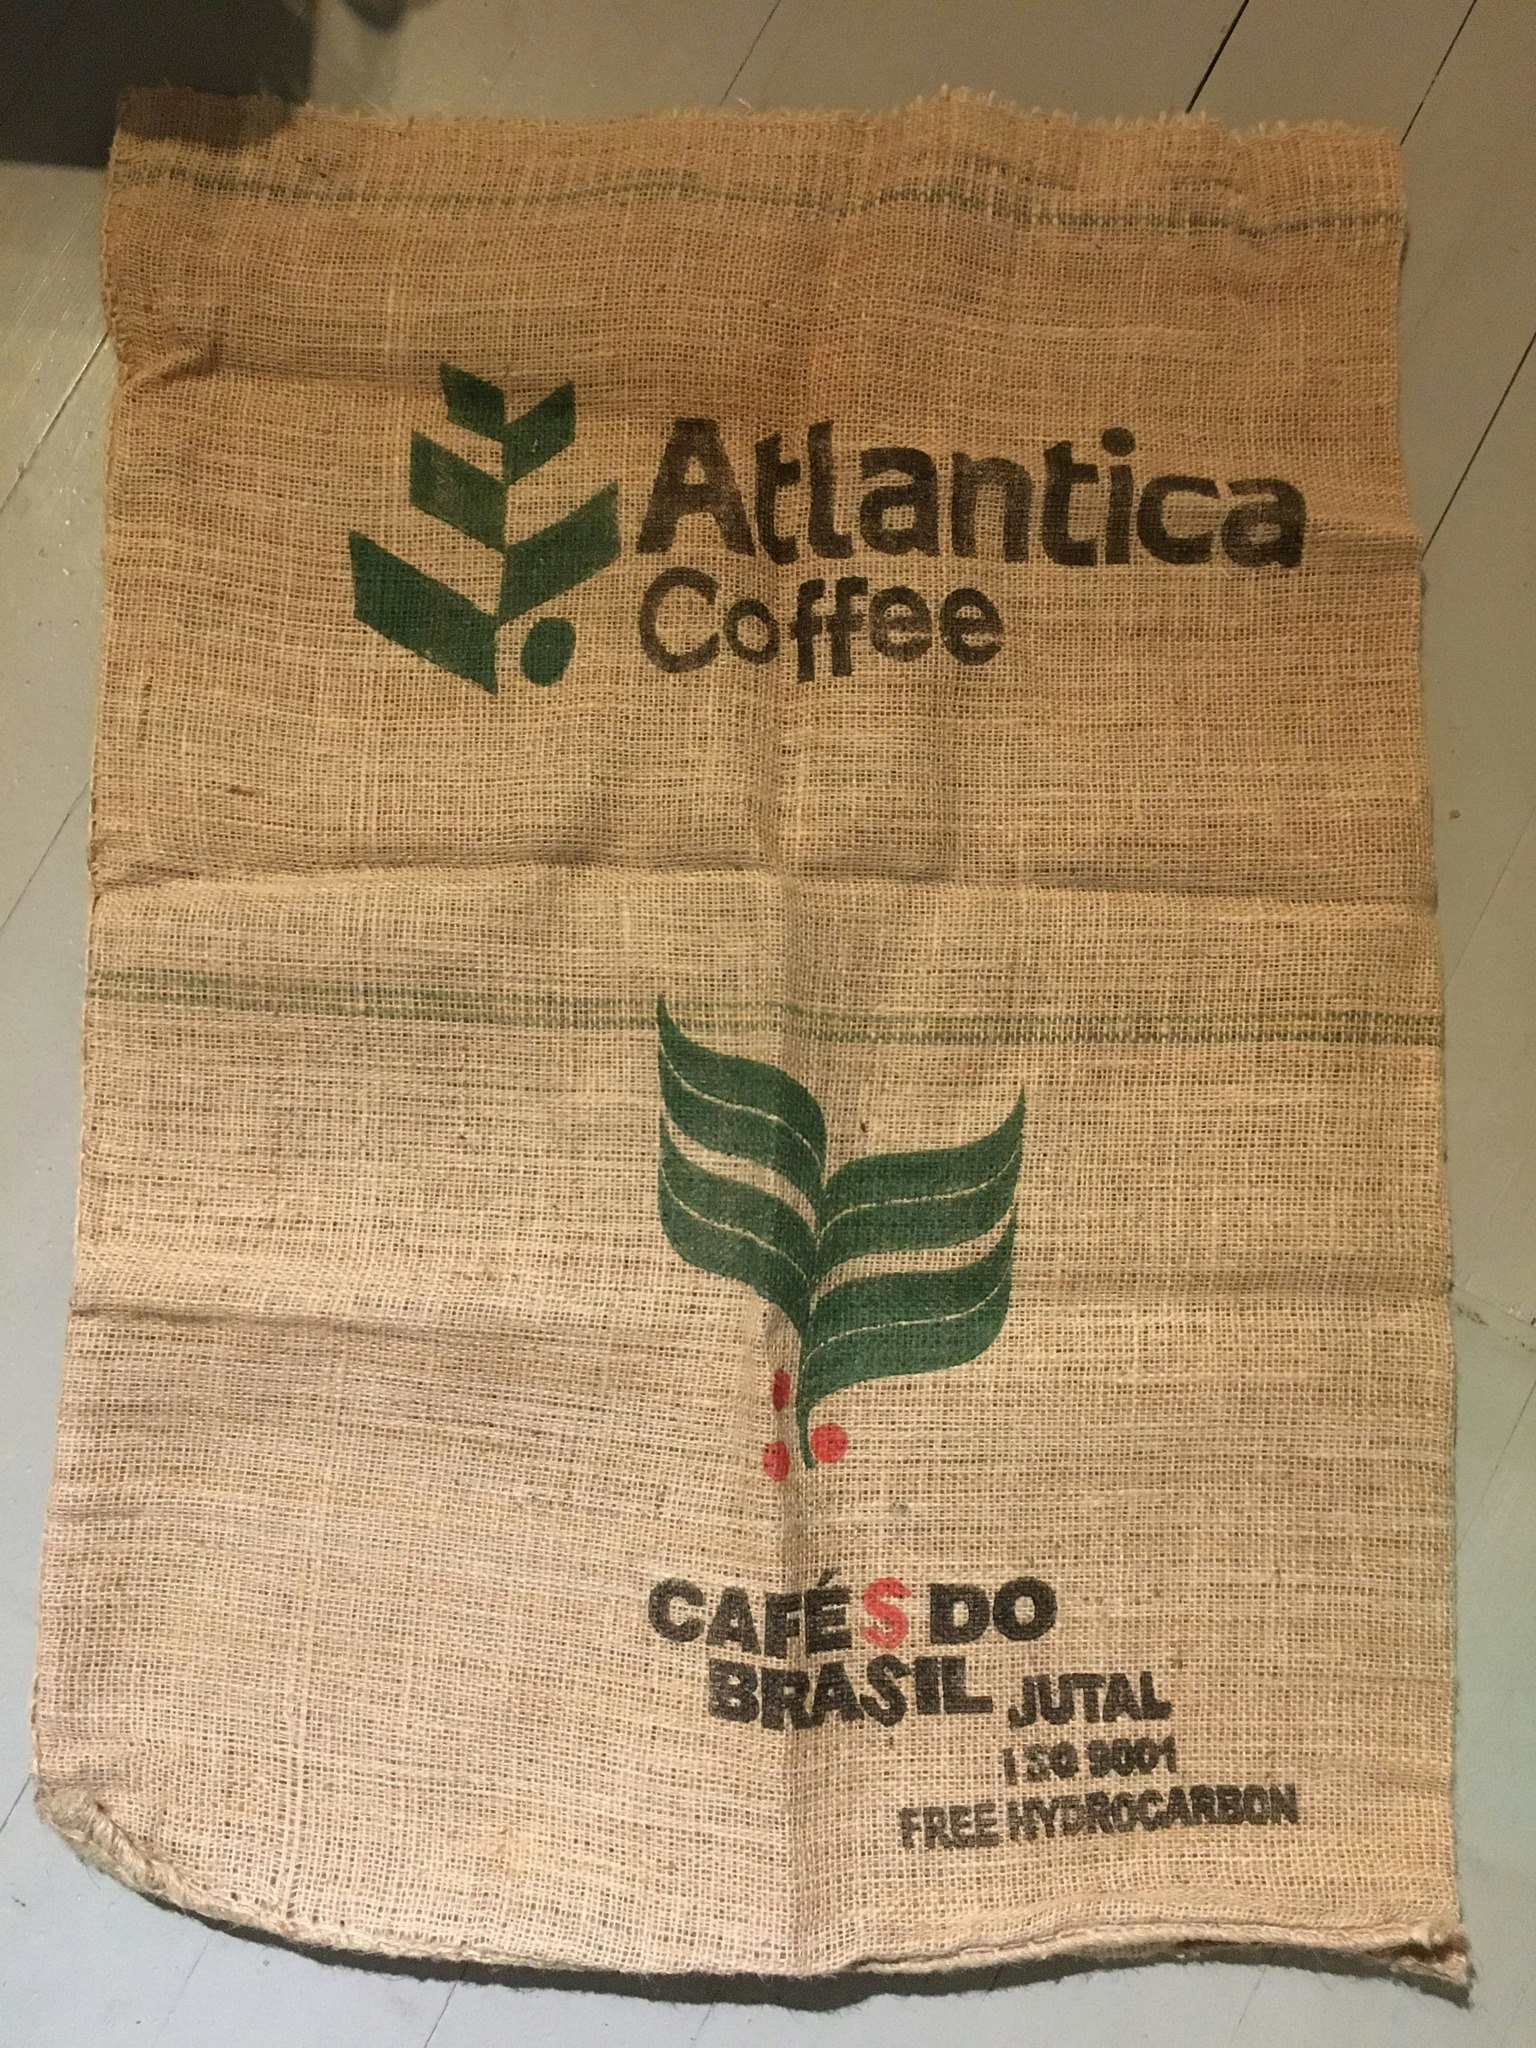 Coffee sack made of jute